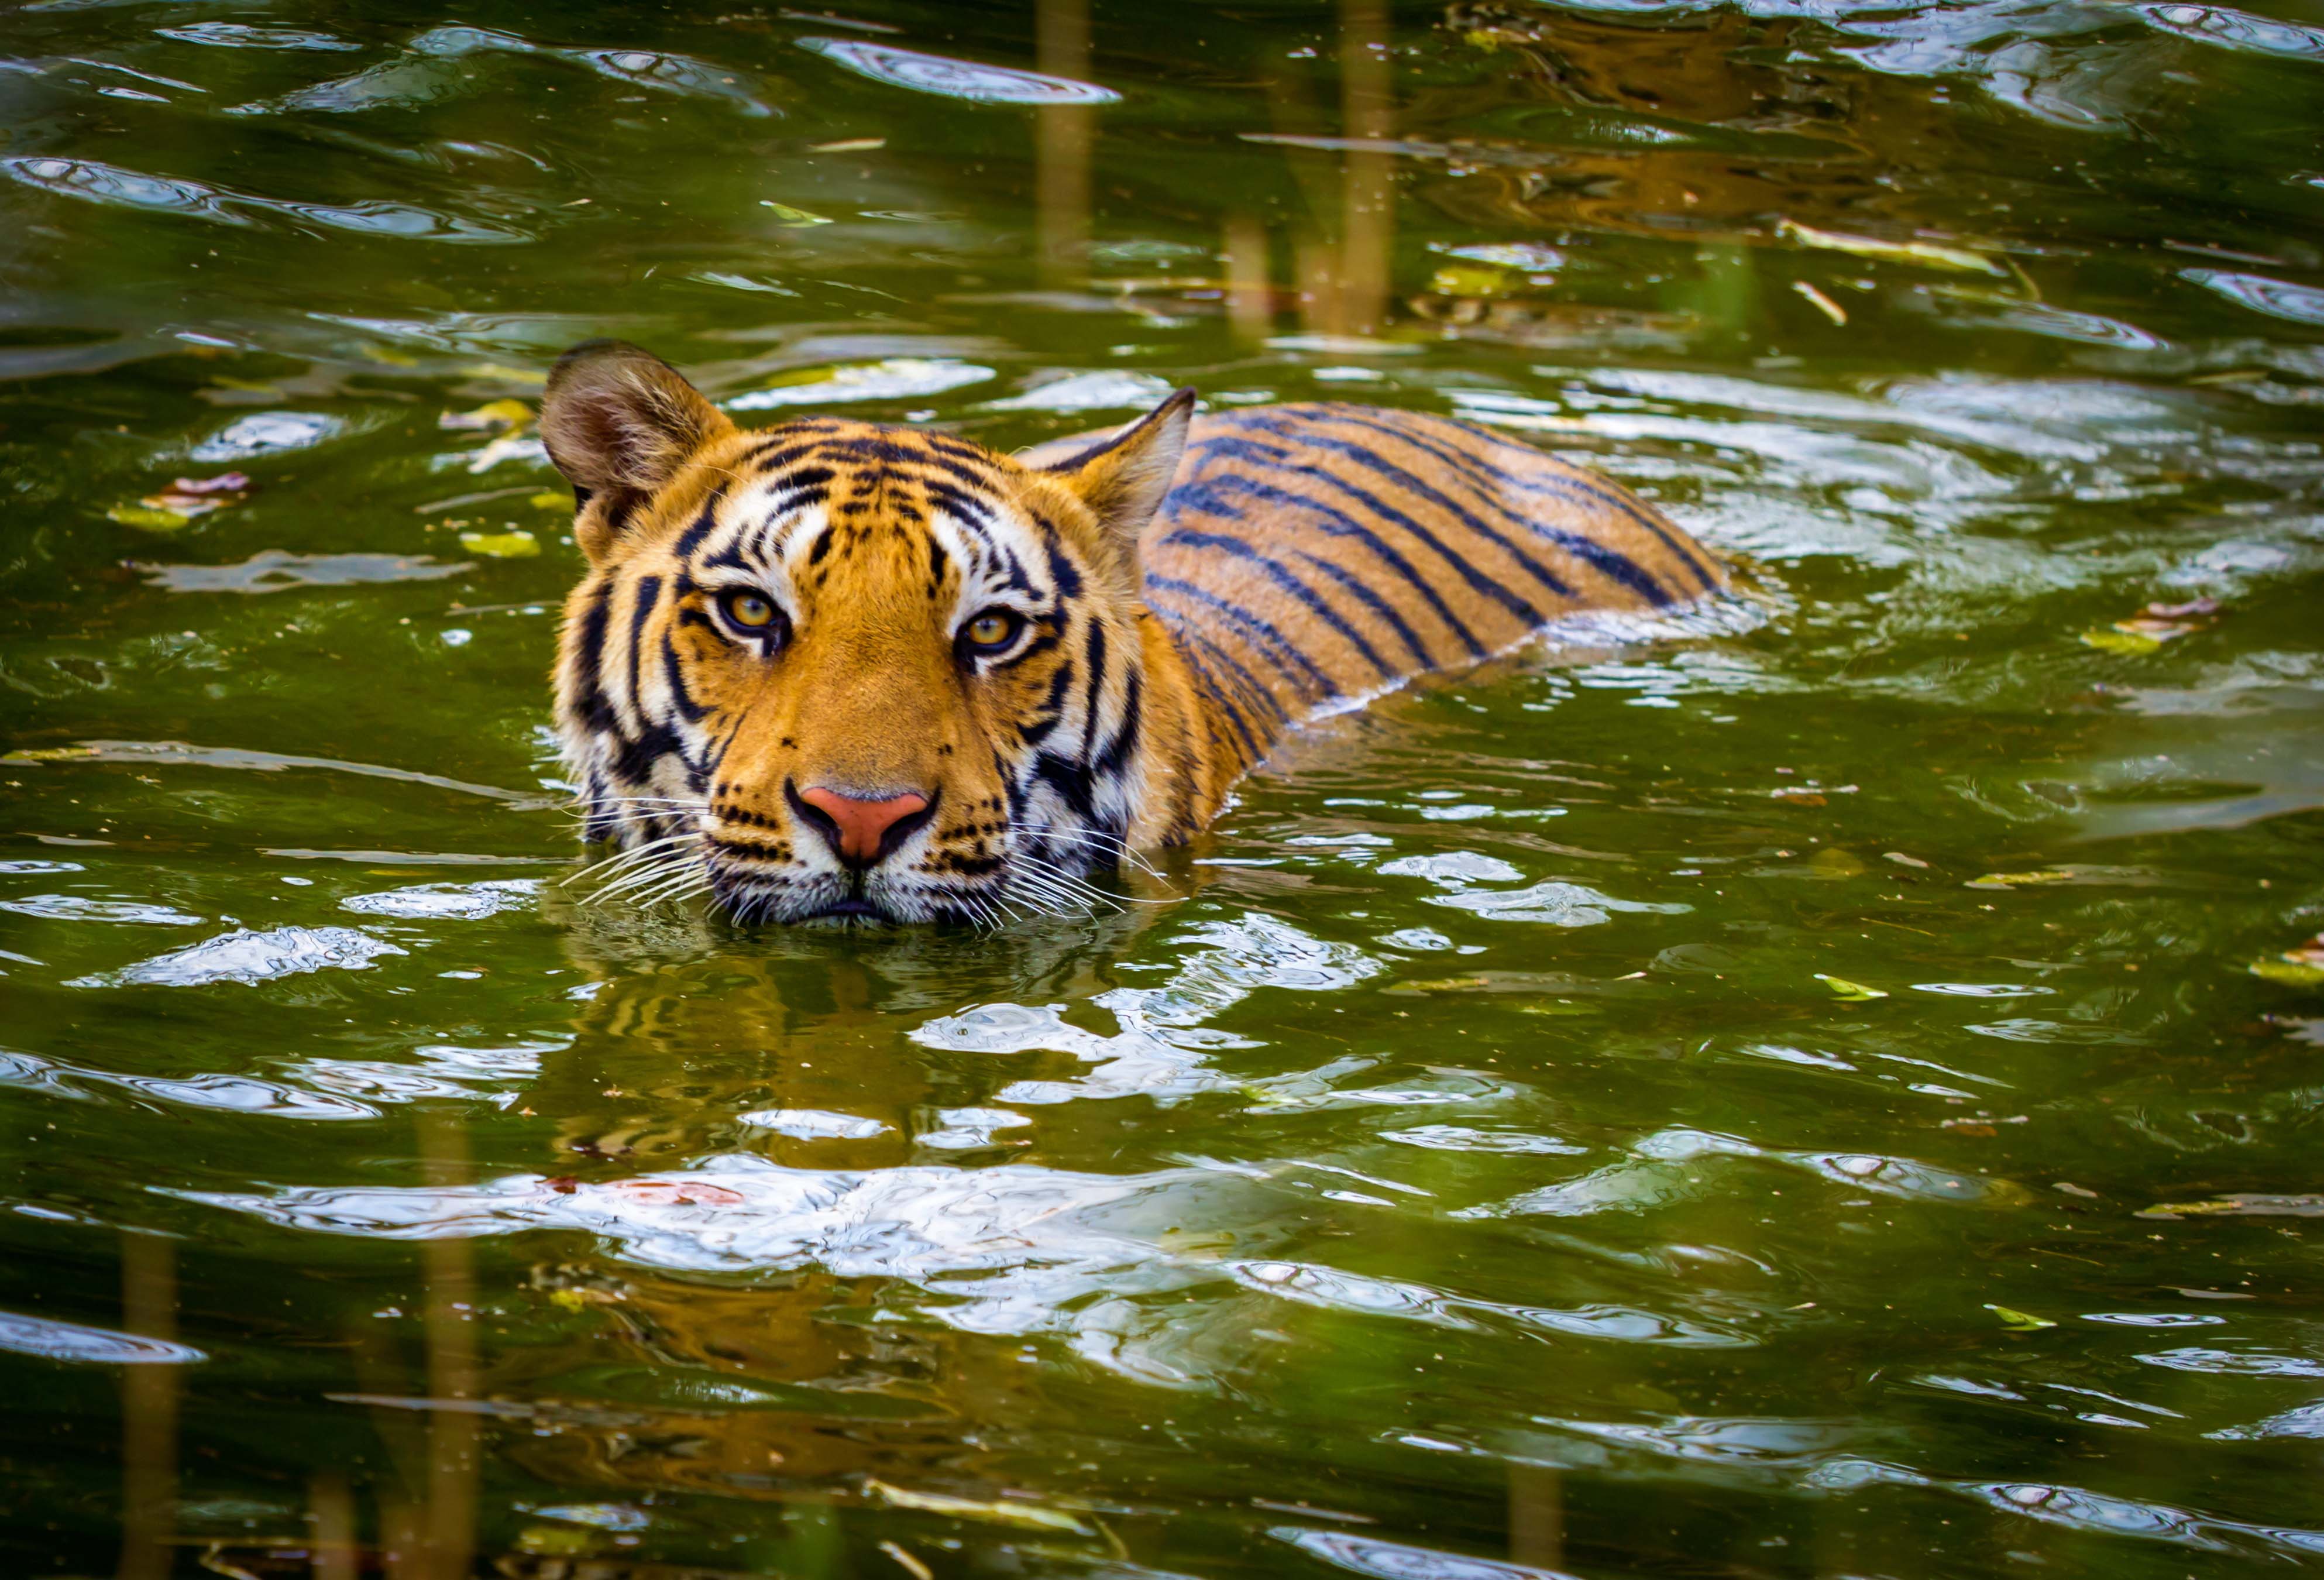 Jim Corbett tiger reserve